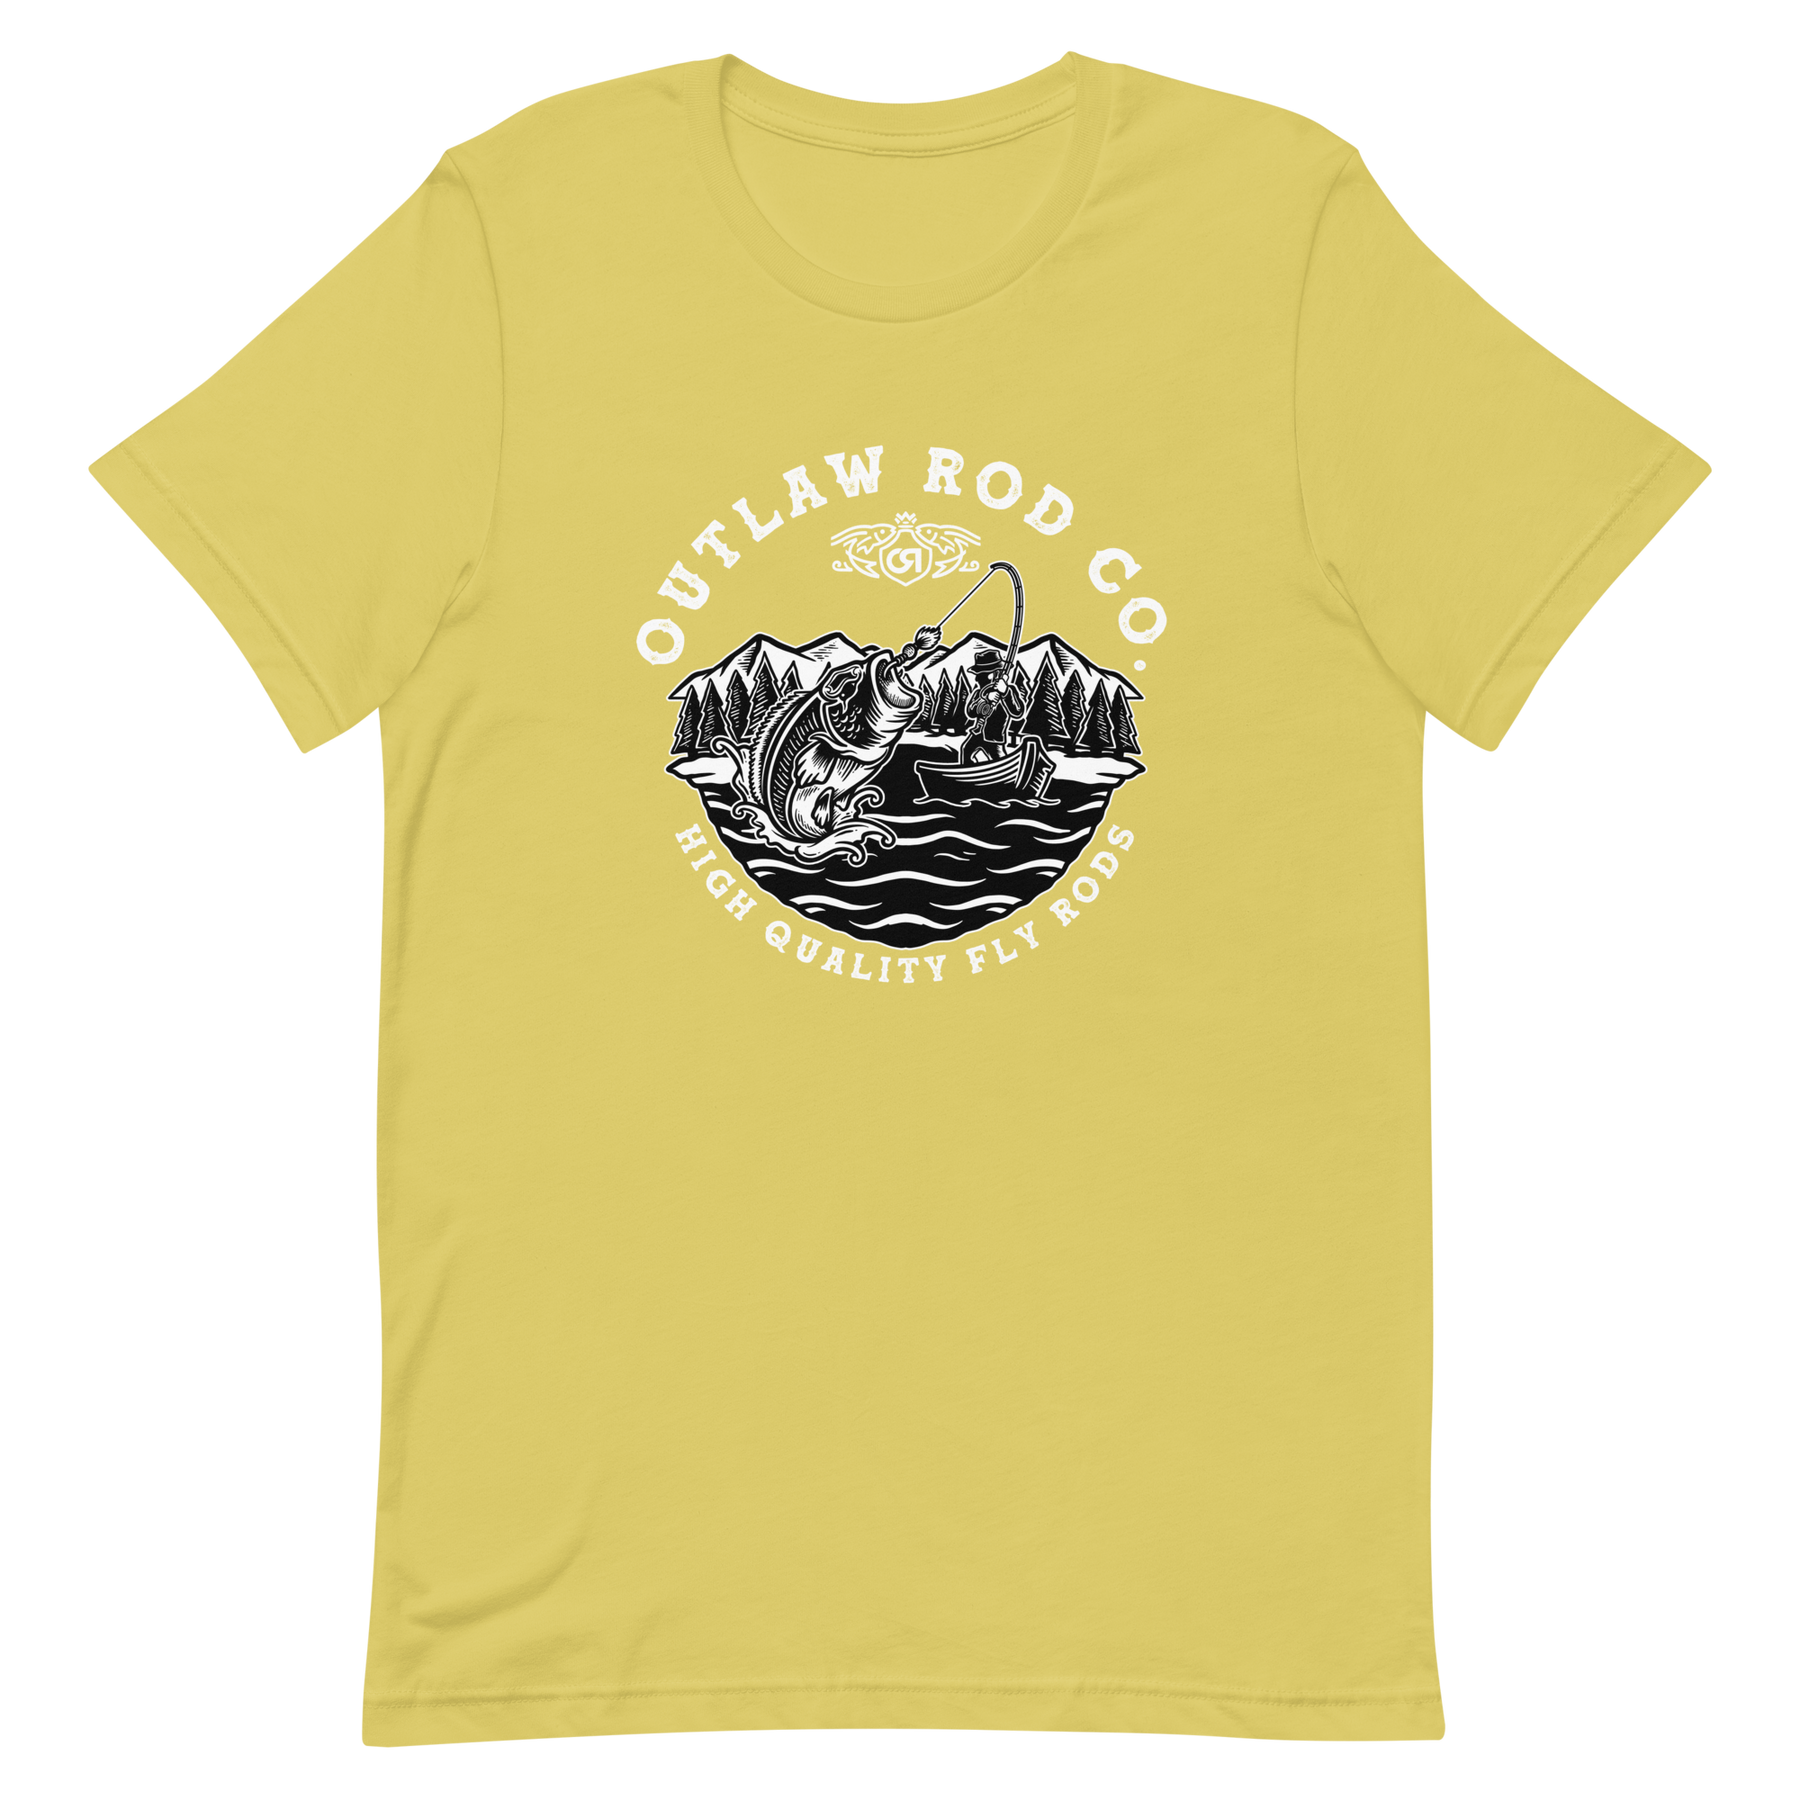 Outlaw Rod Co Short-Sleeve T-Shirt